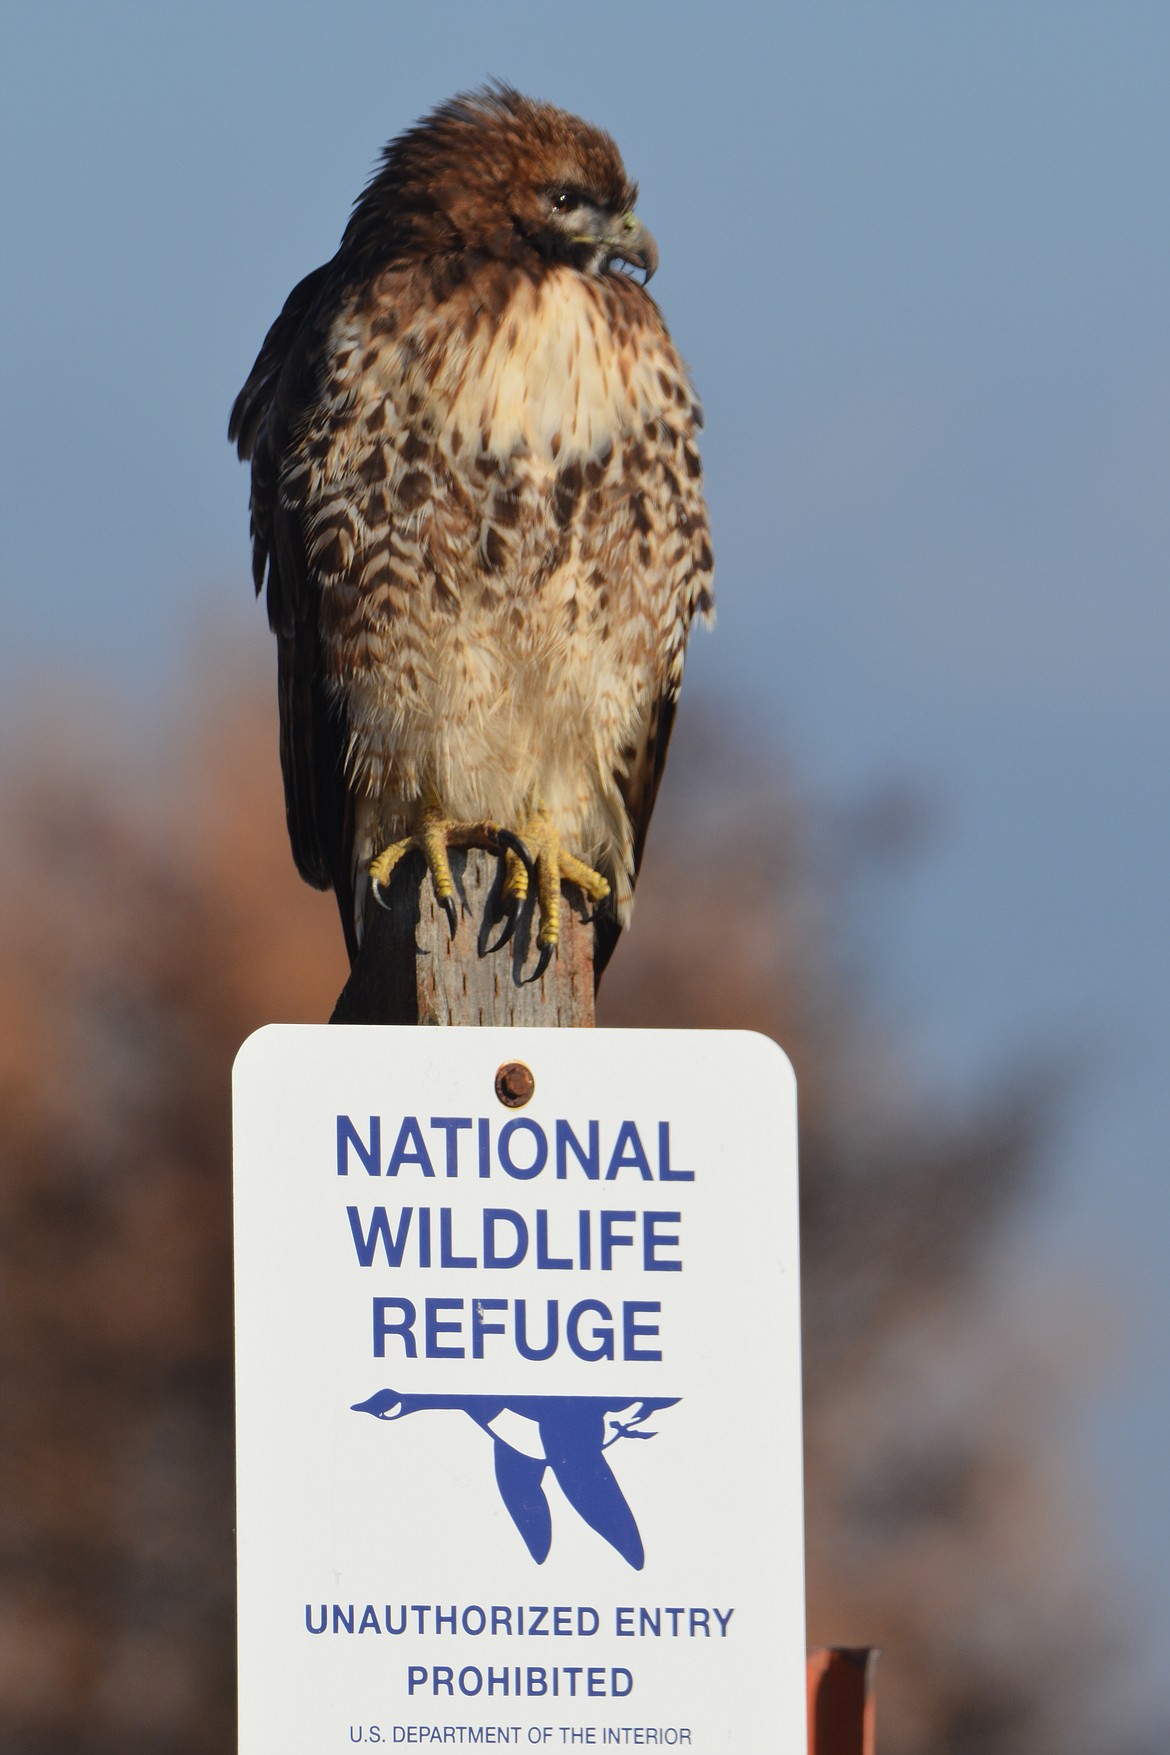 November: Kootenai National Wildlife Refuge guarded by a red tailed hawk.